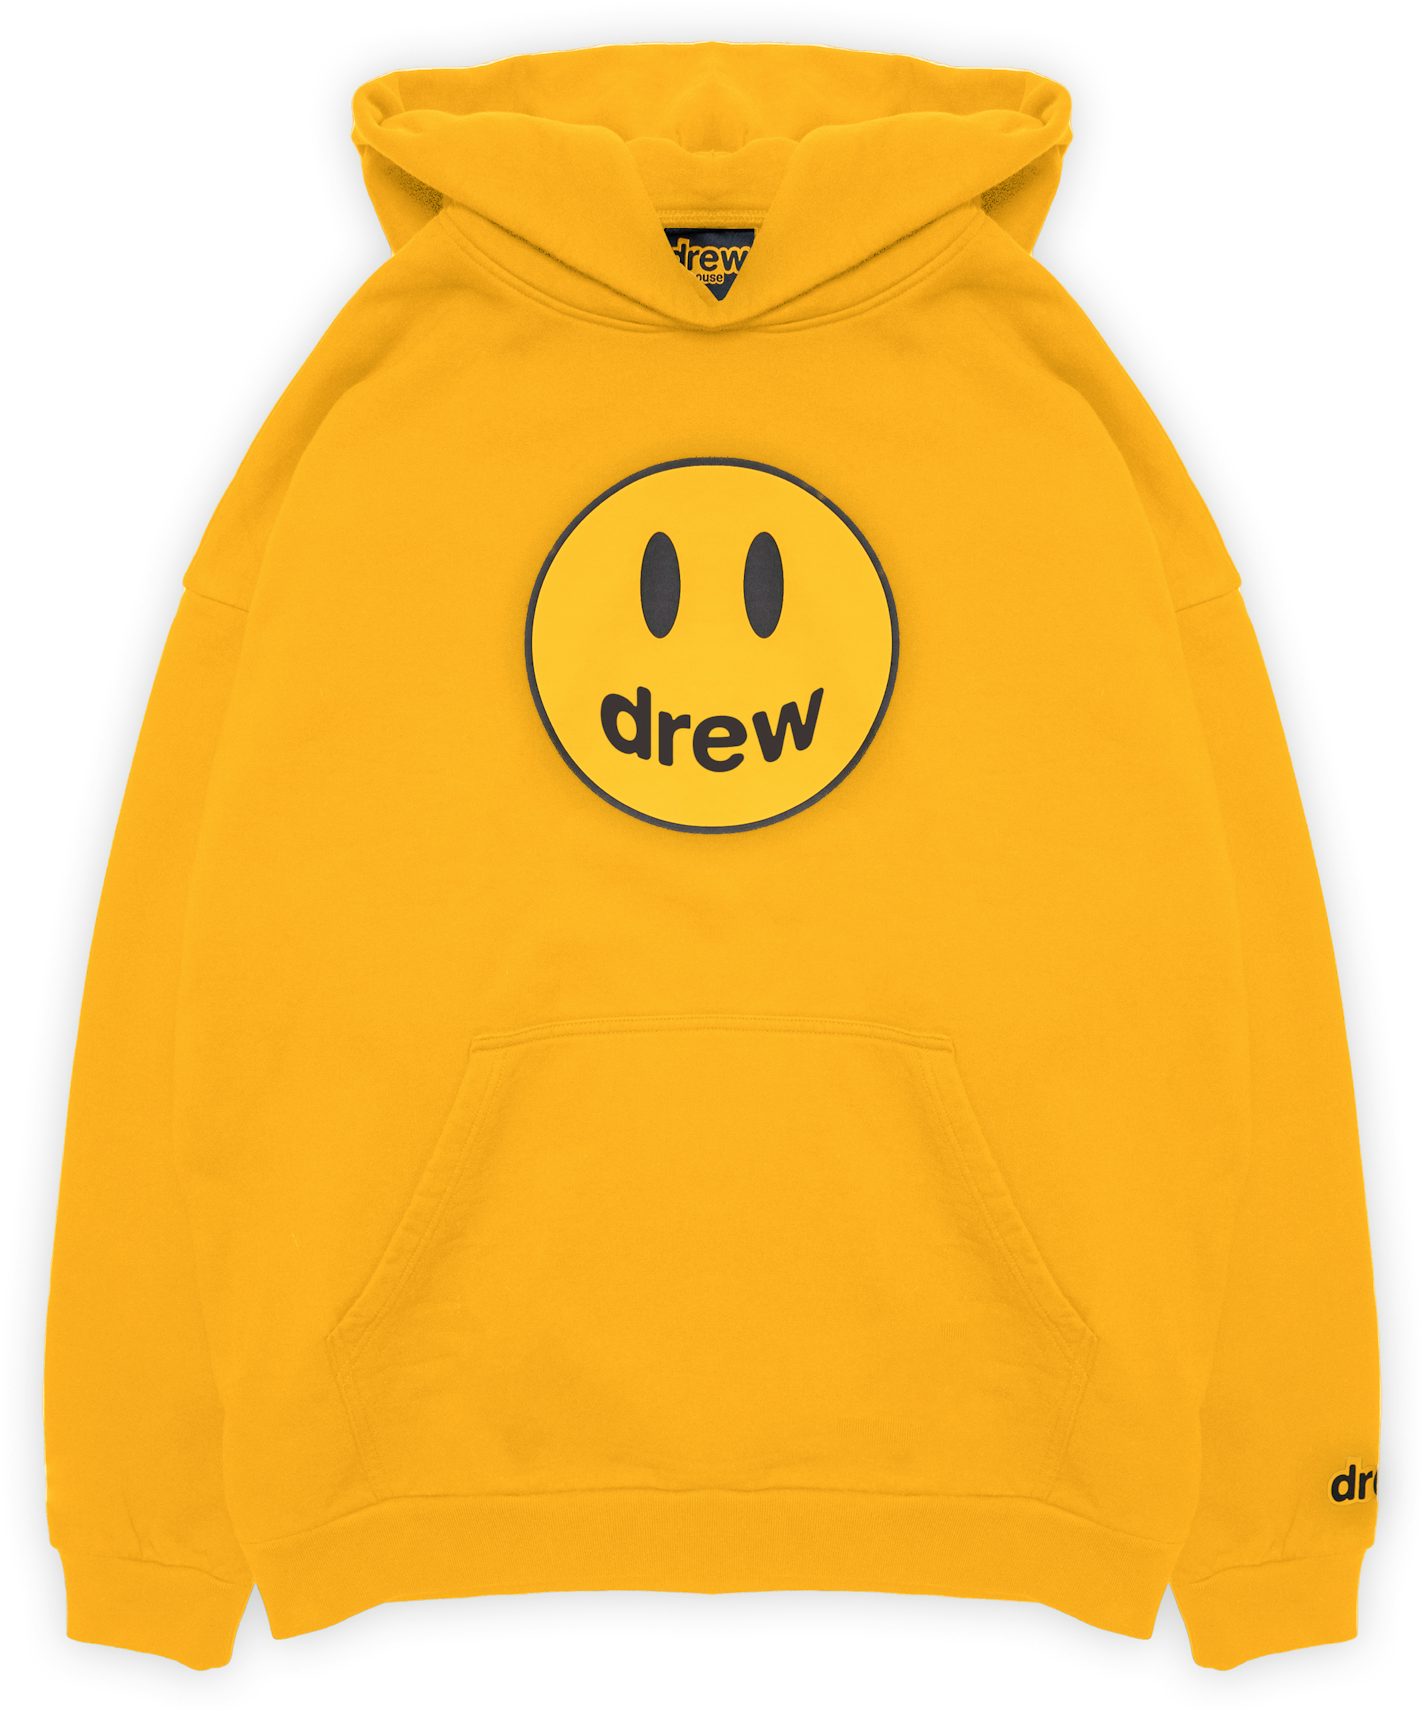 Drew House x Justin Bieber Mascot Slippers Yellow/Black S/M Sz 5